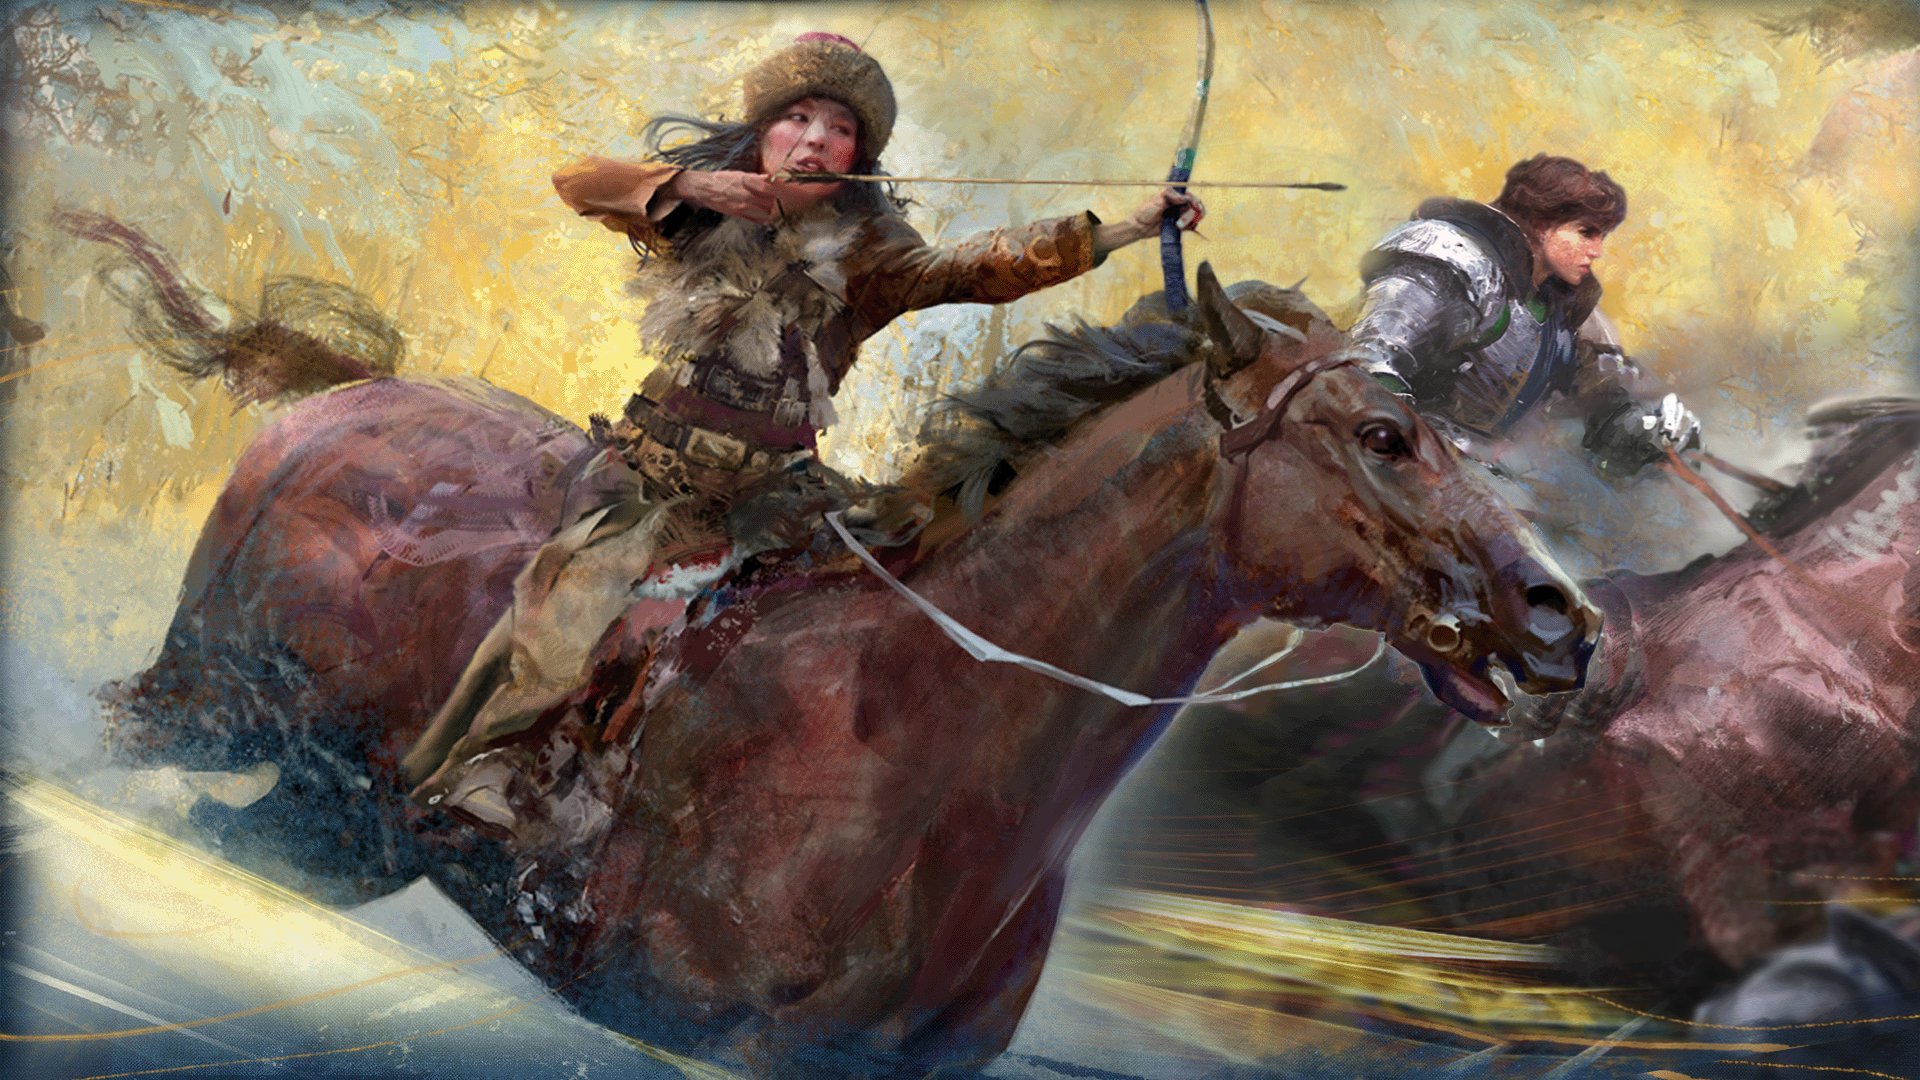 Craig Mullins art piece depicting a Mongolian woman archer on horseback with bow draw alongside Joan of Arc on horseback riding into battle.